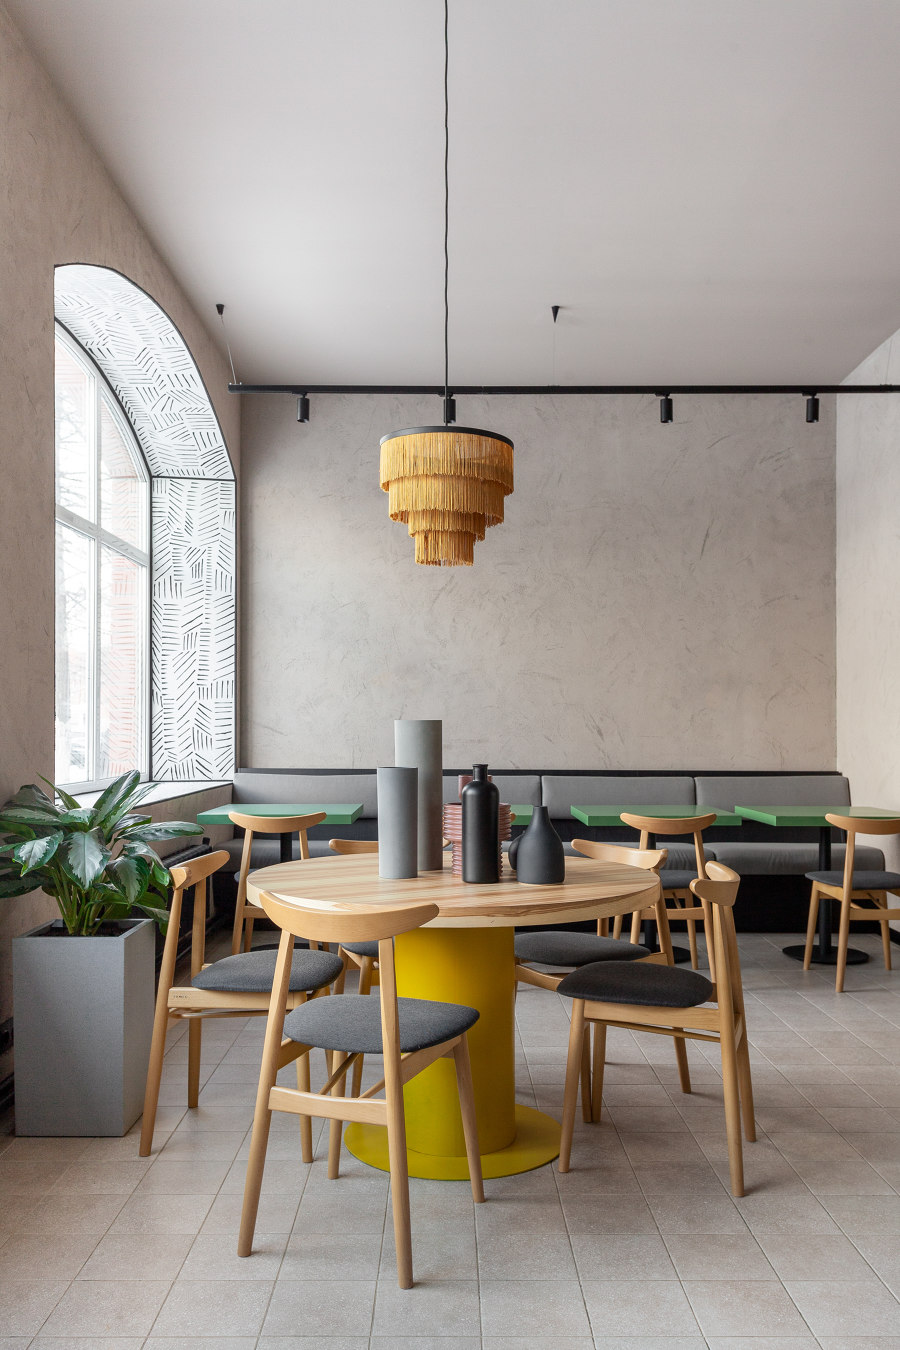 SHAVI bistro by Studio SHOO | Café interiors